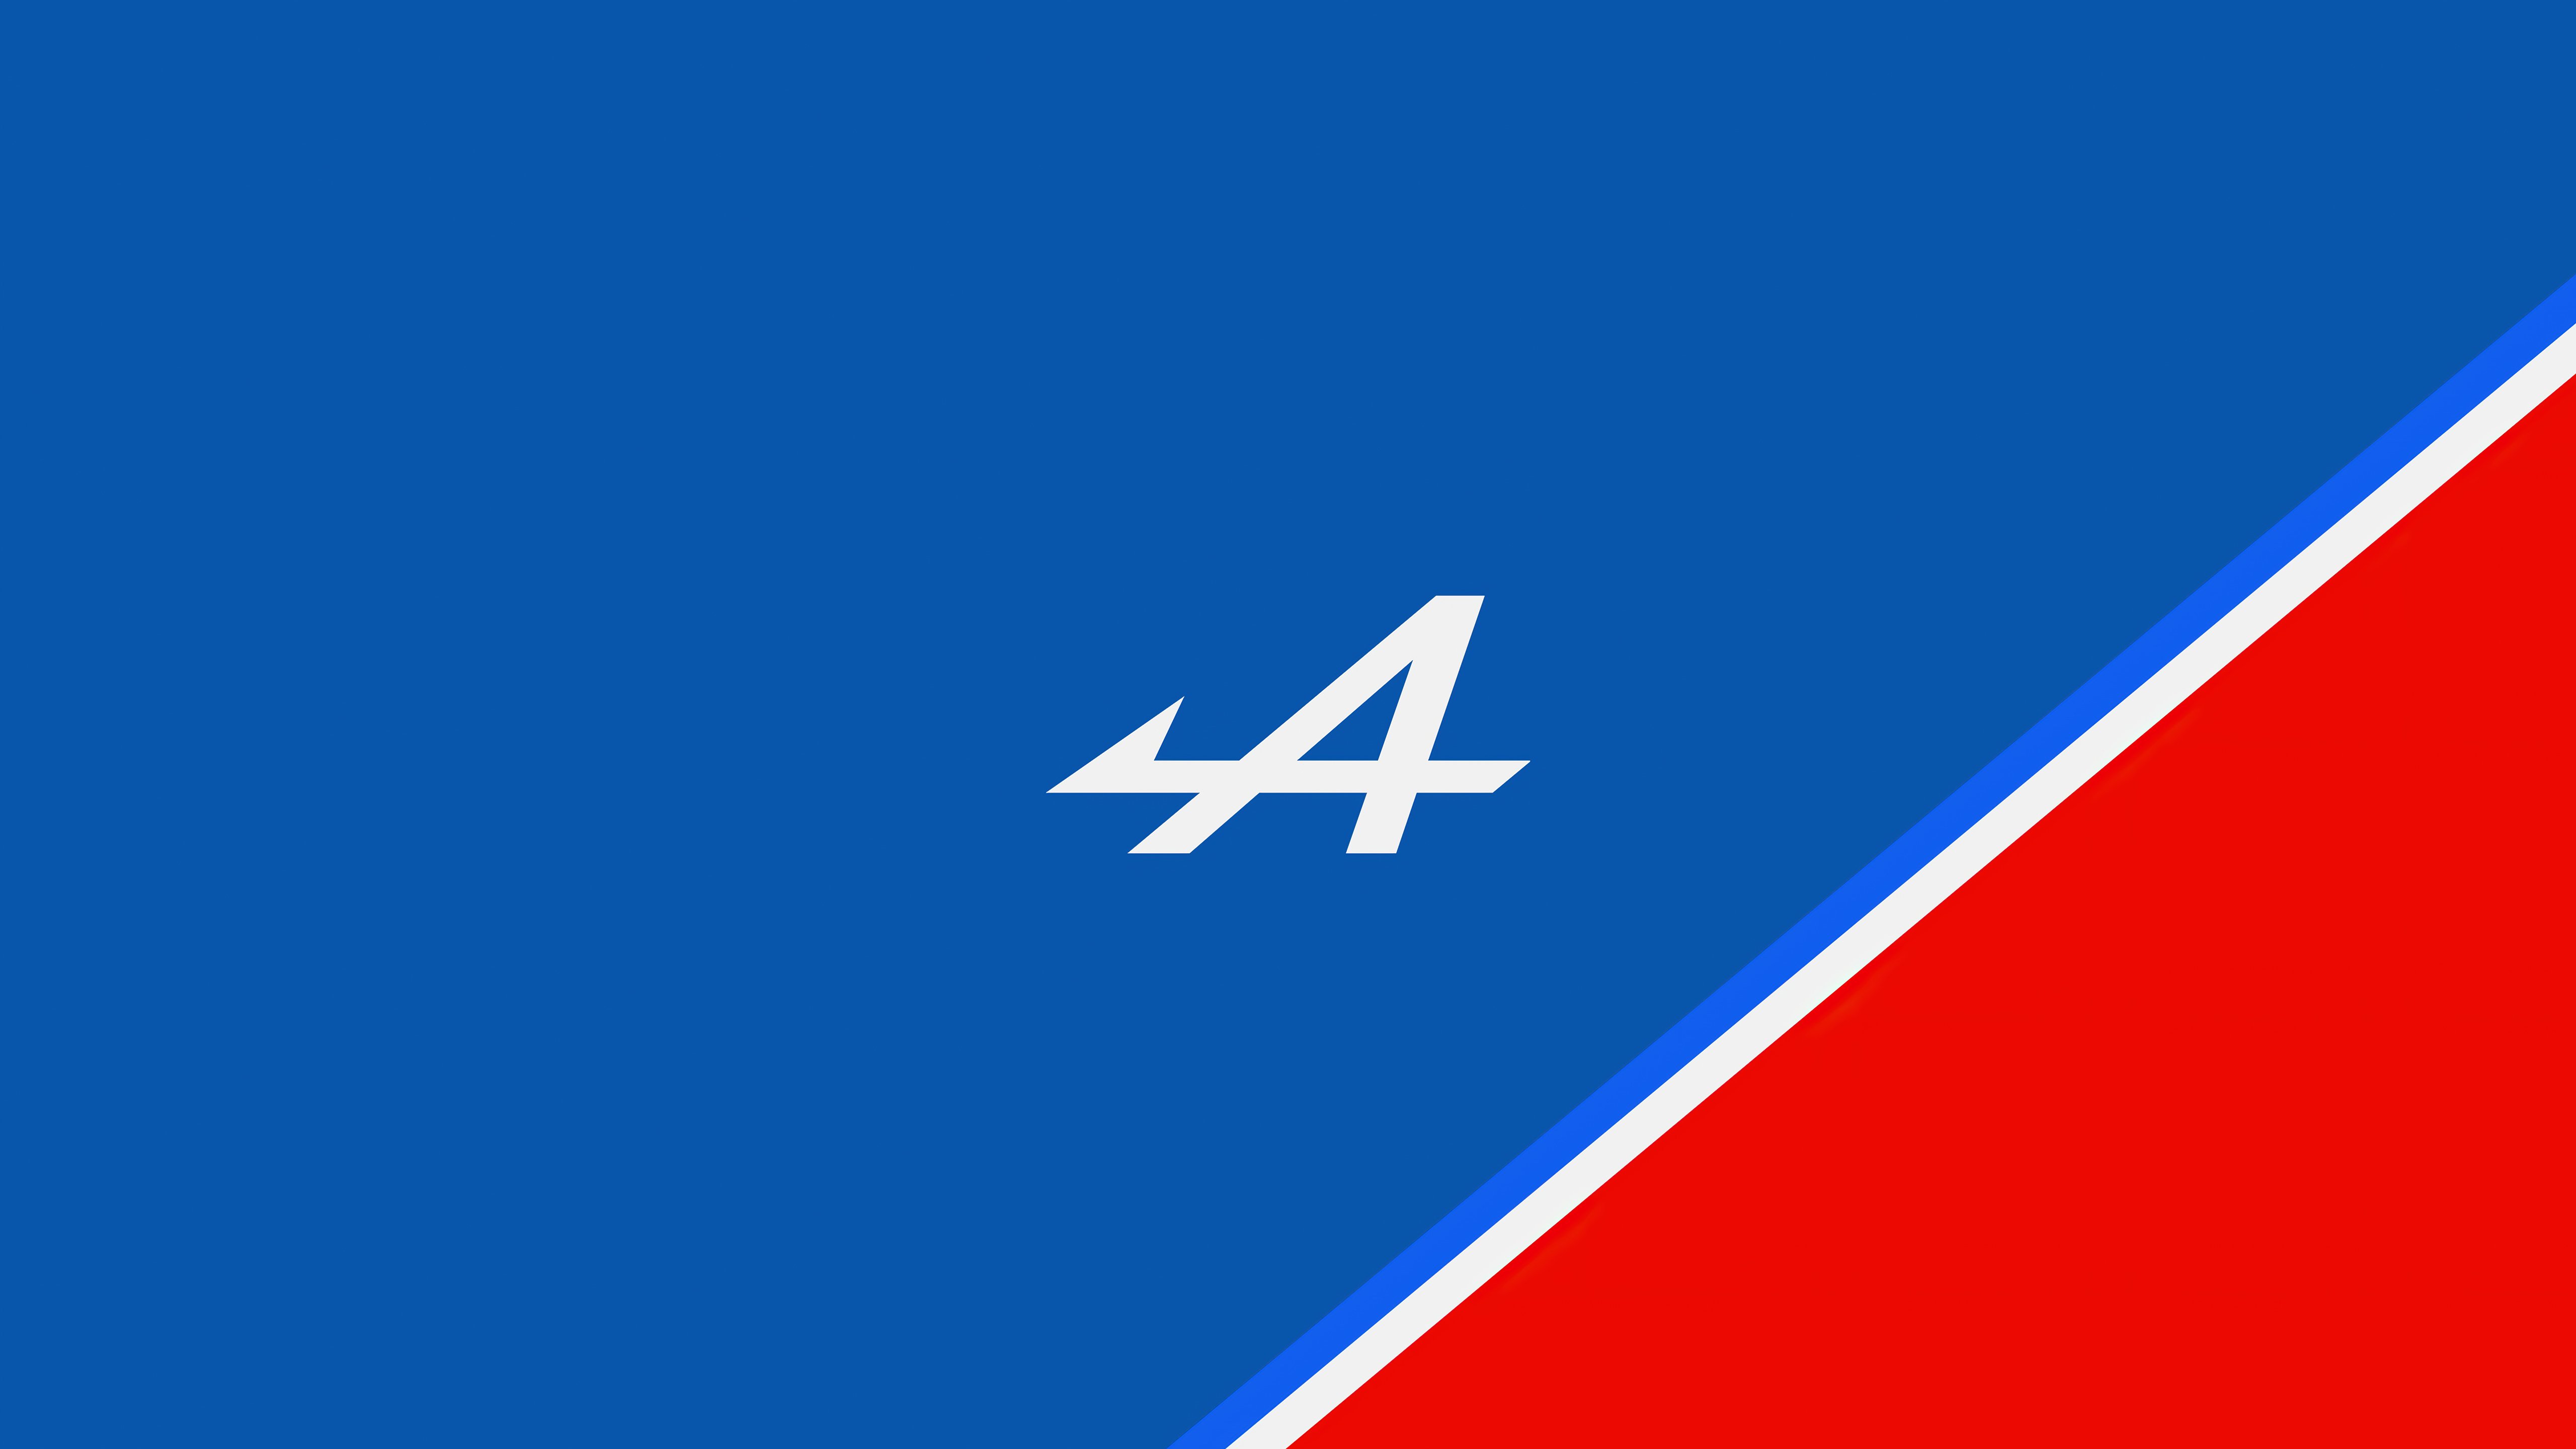 Alpine F1 Logo Minimal, HD Logo, 4k Wallpaper, Image, Background, Photo and Picture